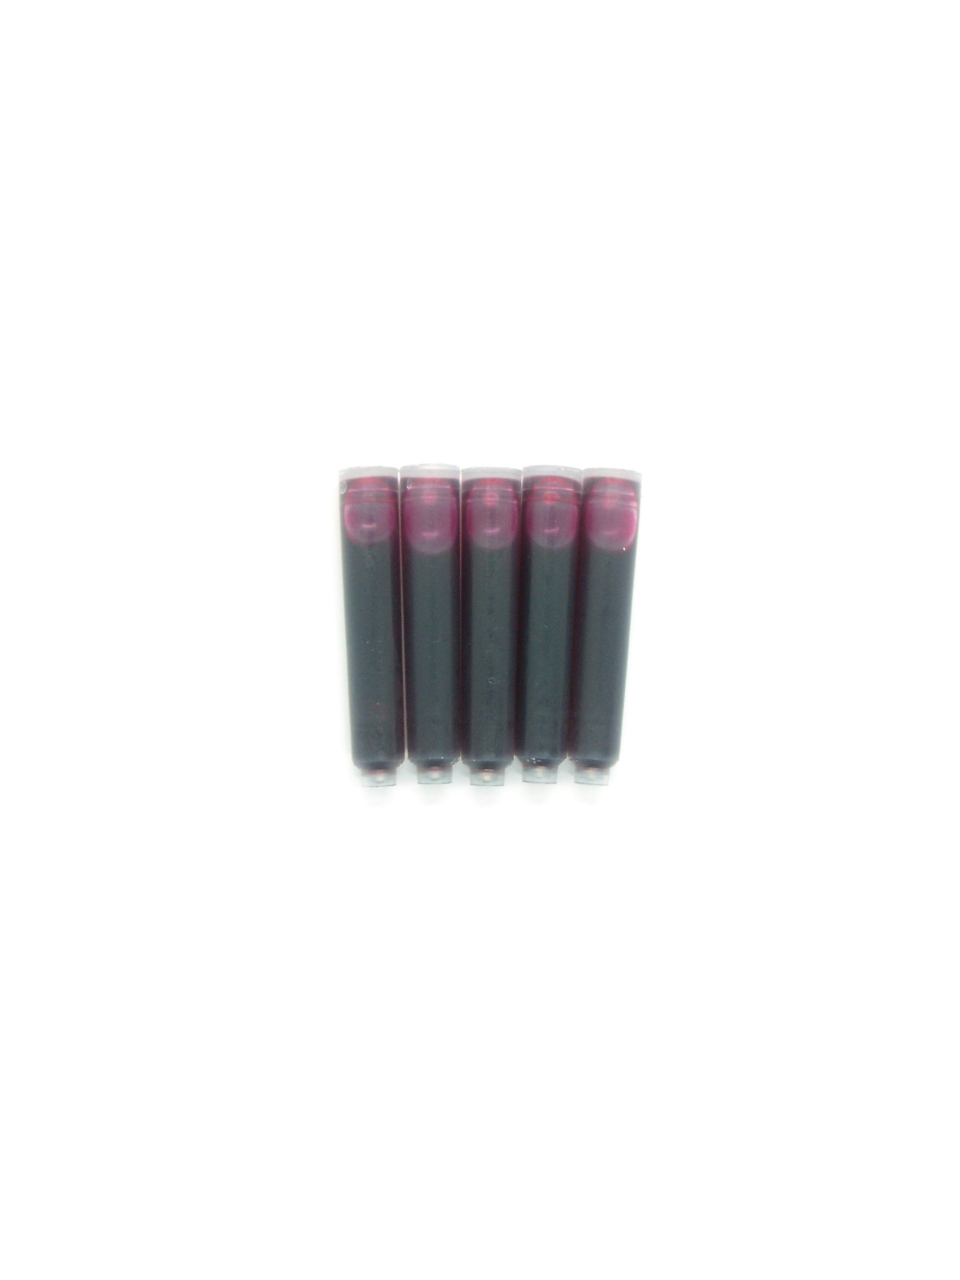 PenConverter Ink Cartridges For Daniel Hechter Fountain Pens (Pink)